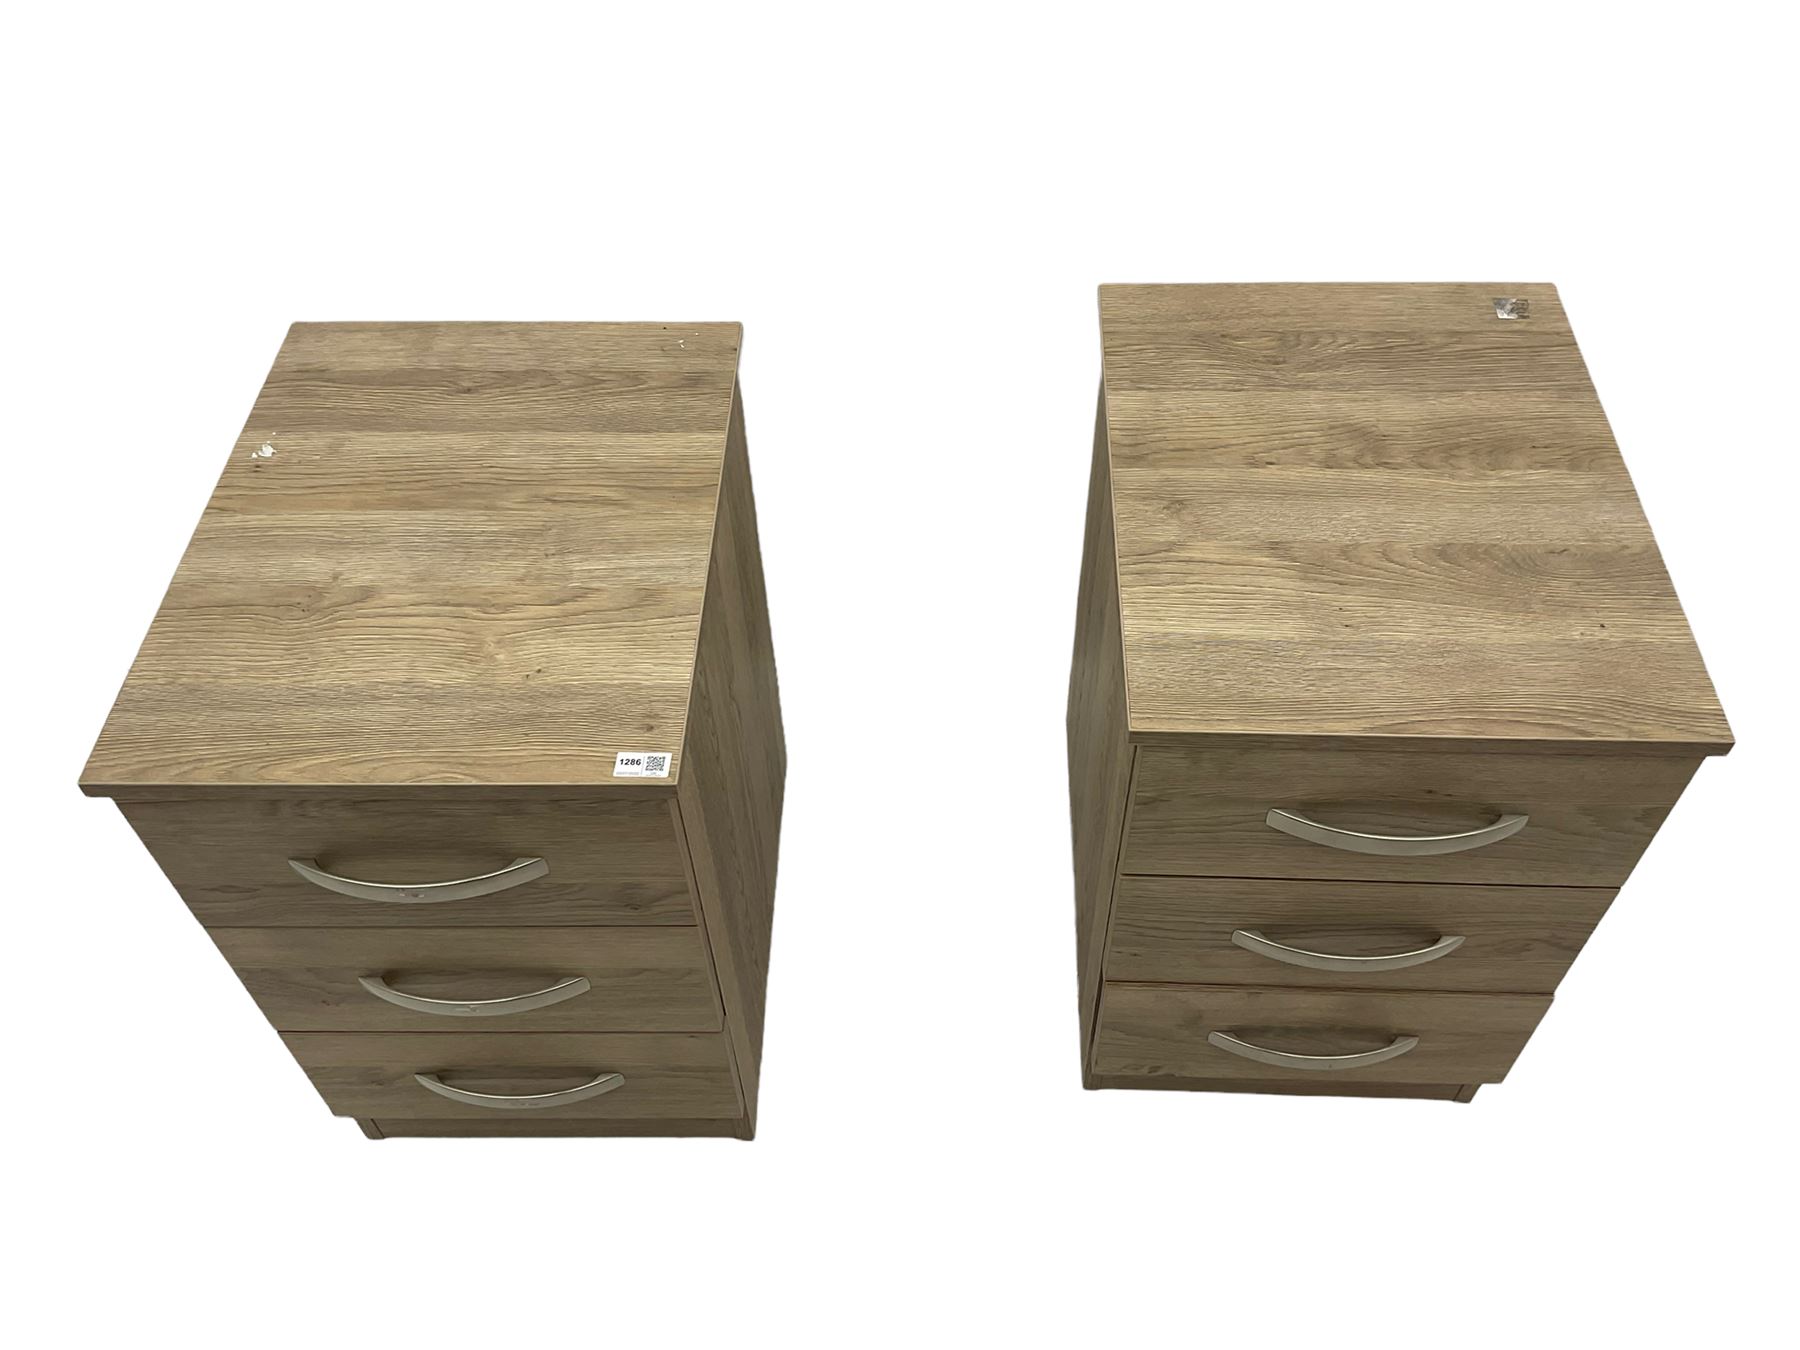 Pair oak finish pedestal chests - Image 5 of 6